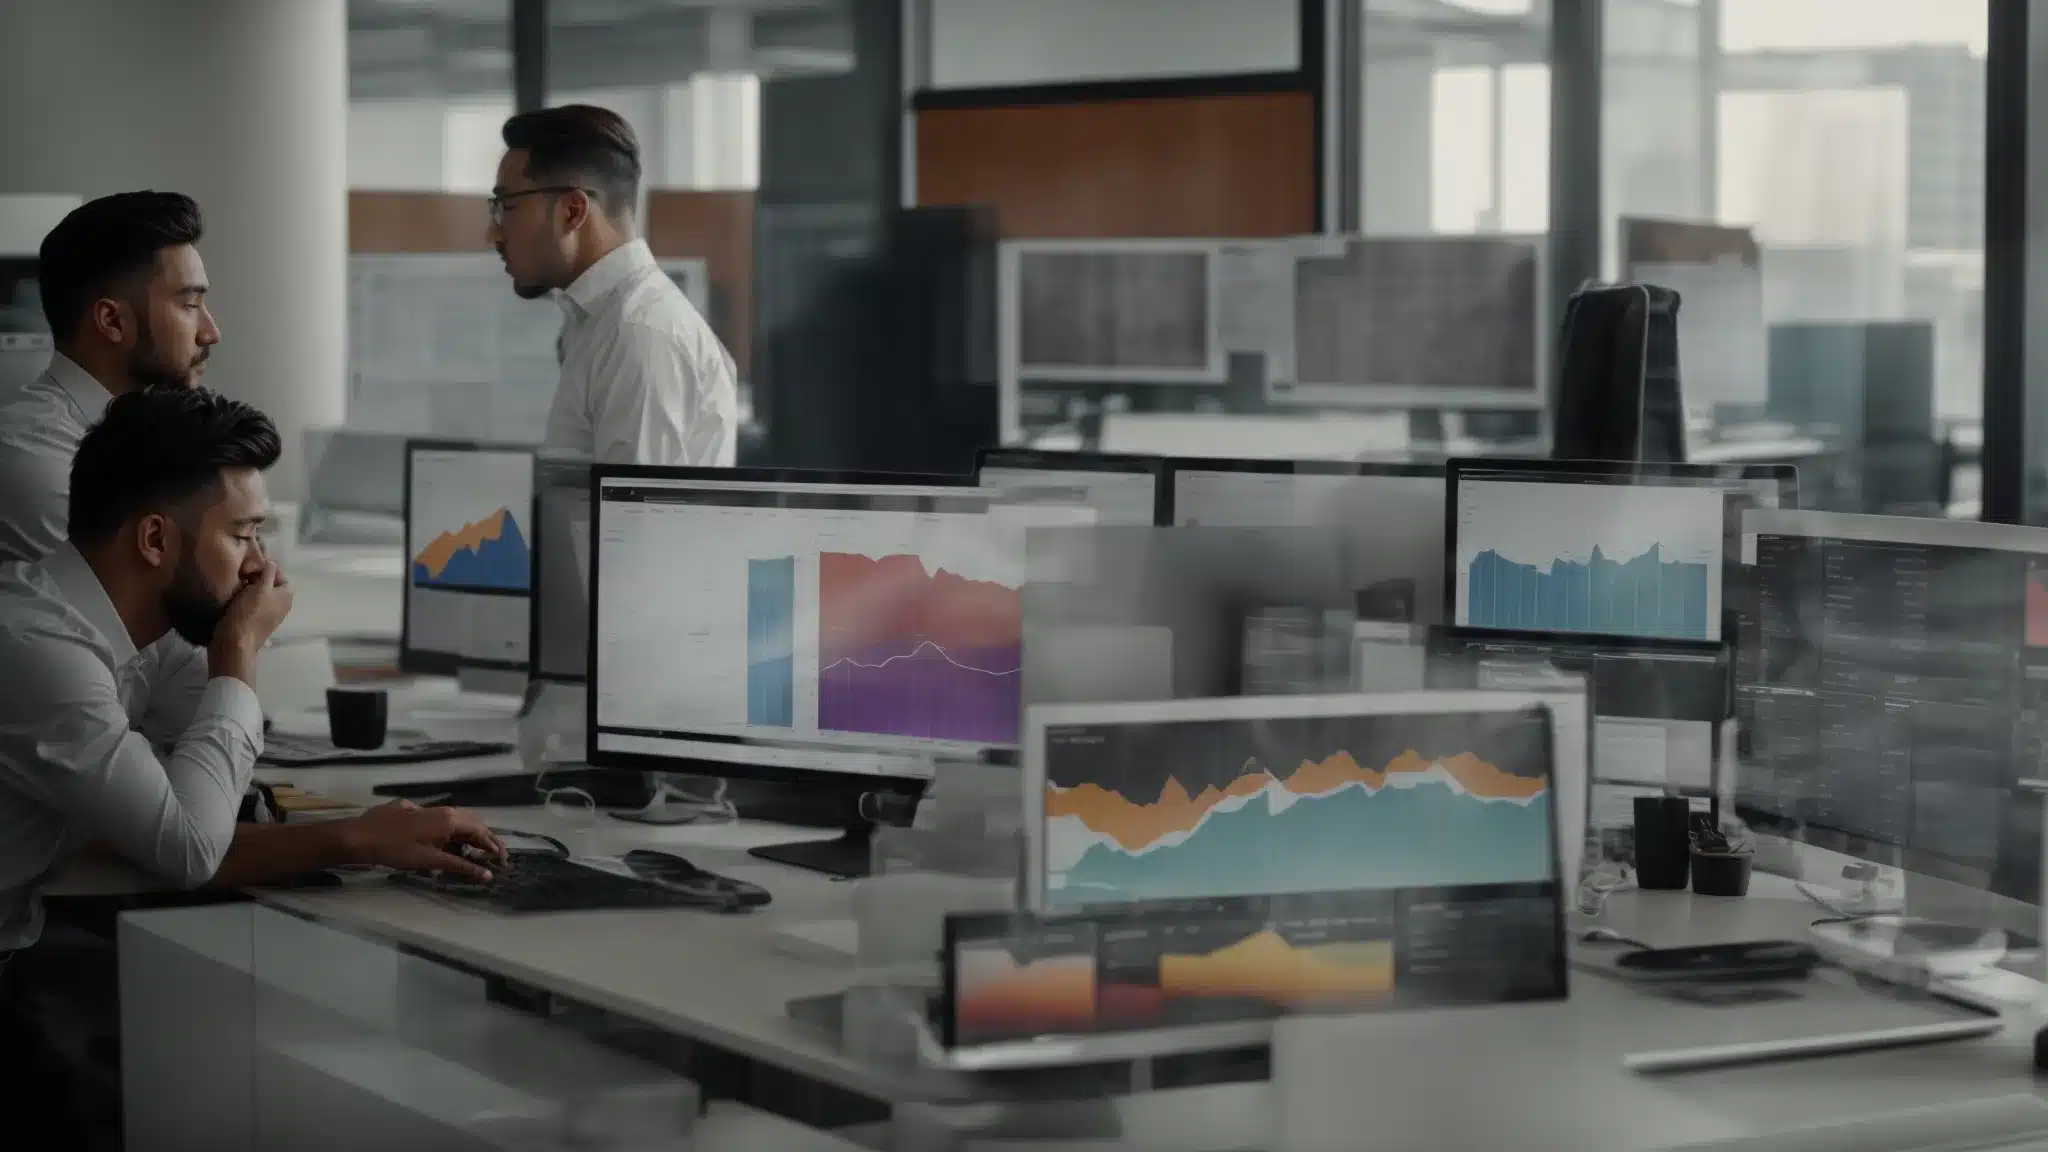 A Digital Marketing Team Reviews Performance Metrics On A Computer Dashboard In A Modern Office.